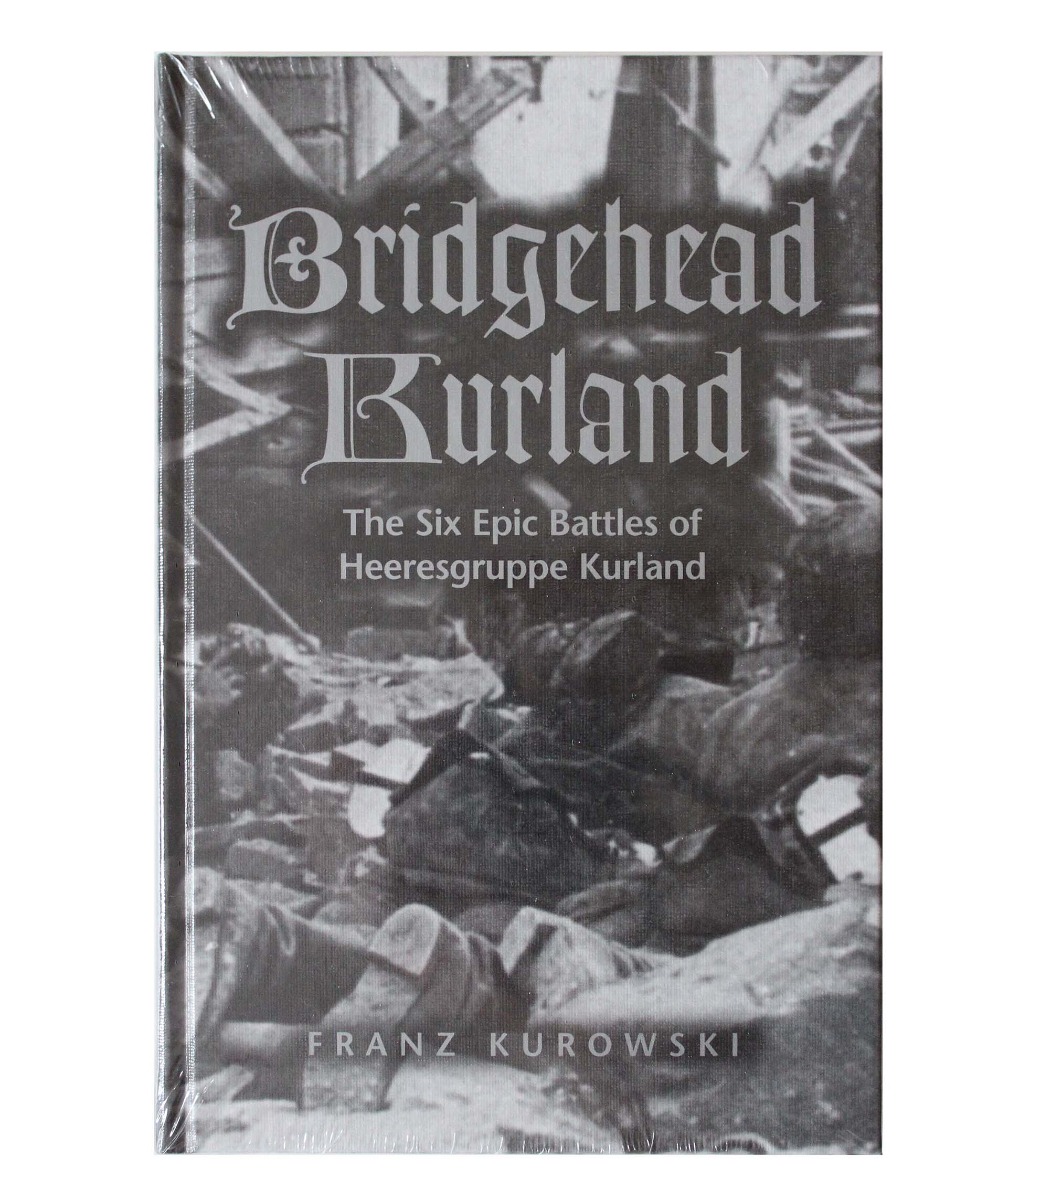 BRIDGEHEAD KURLAND BOOK BY FRANZ KURKOWSKI